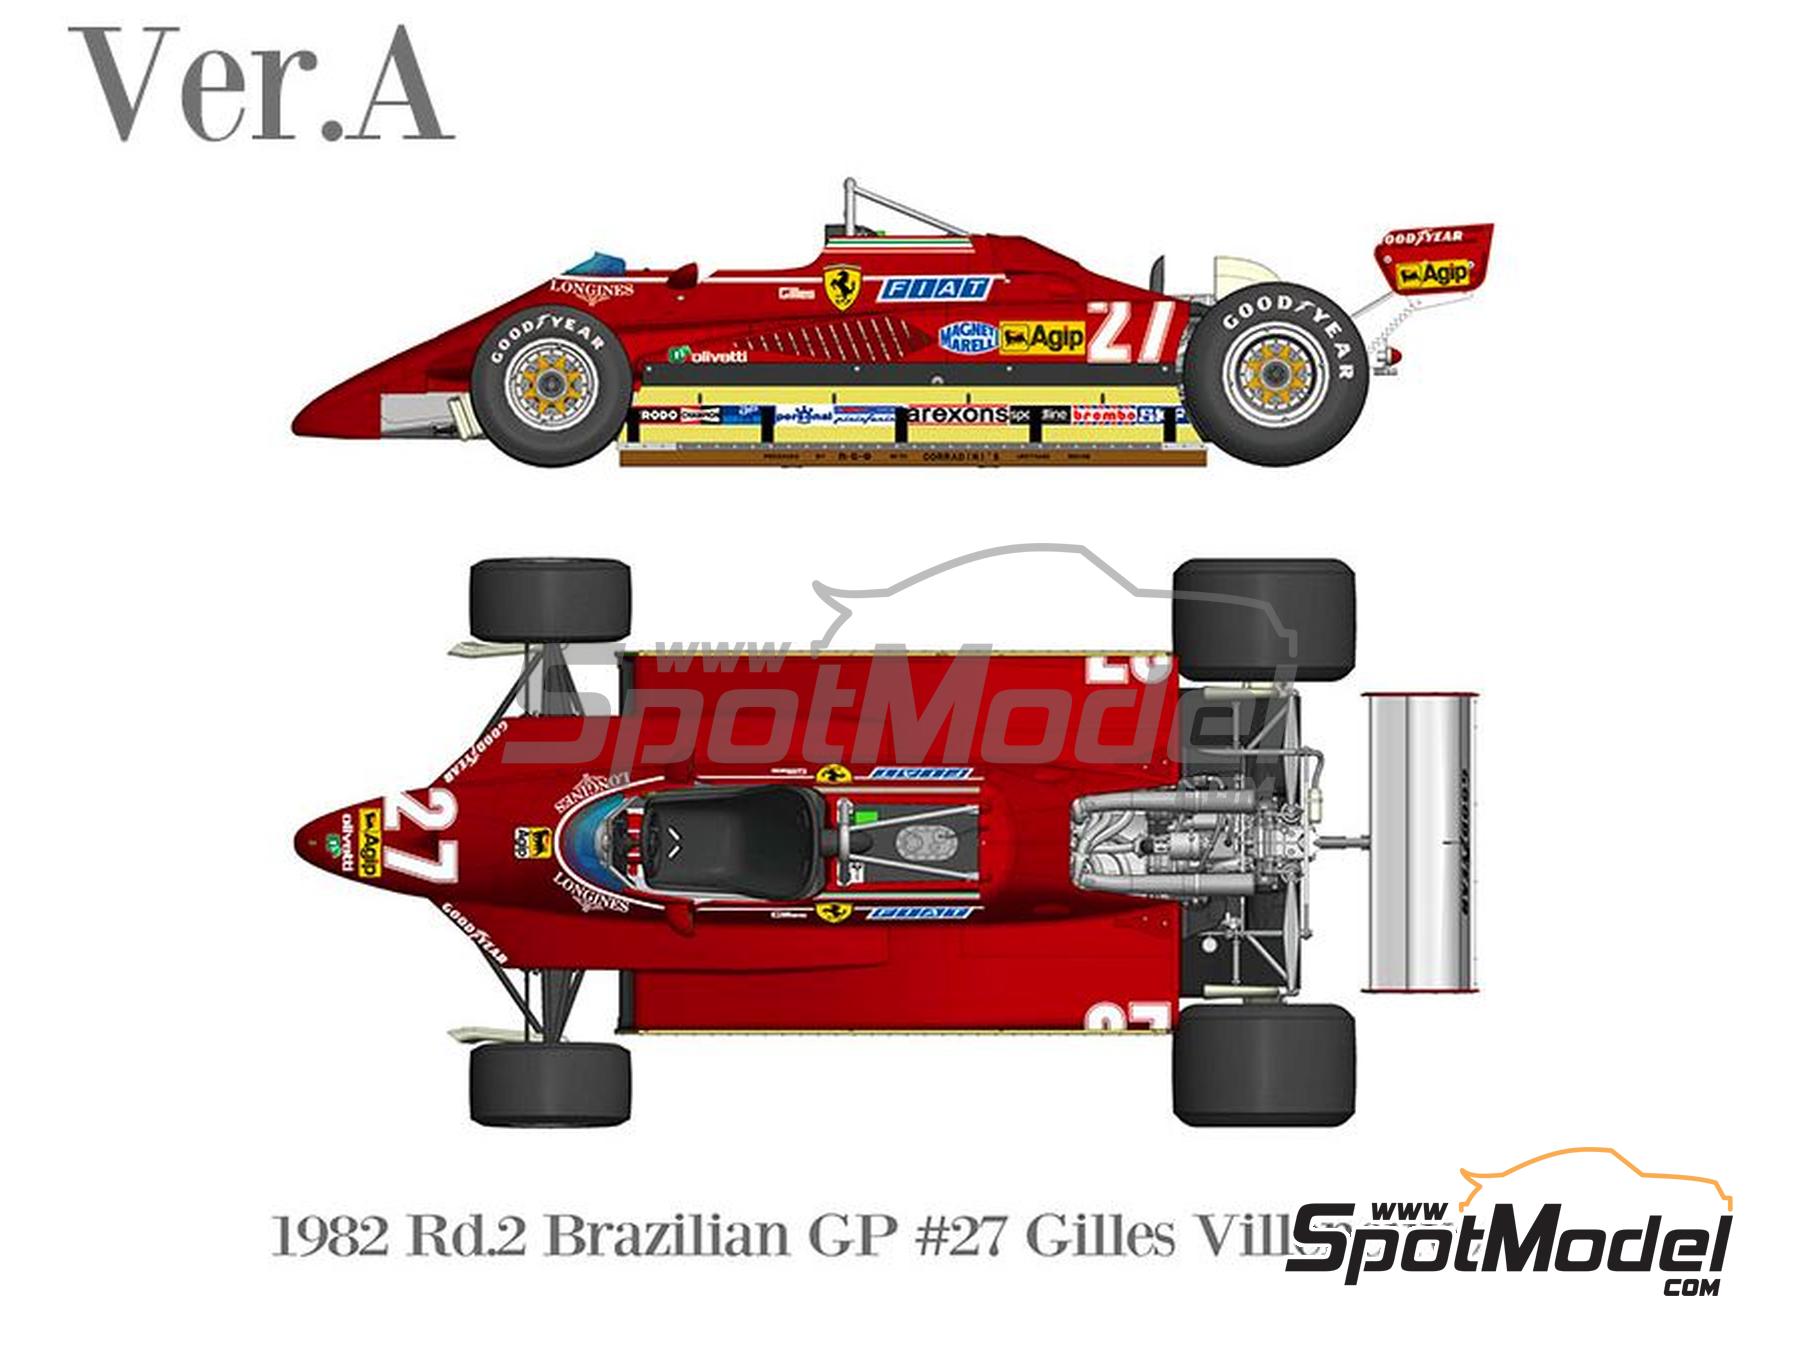 Model Factory Hiro K641 1:12 Ferrari 126CK ver.E 1981 Rd.14 Canadian GP #27 